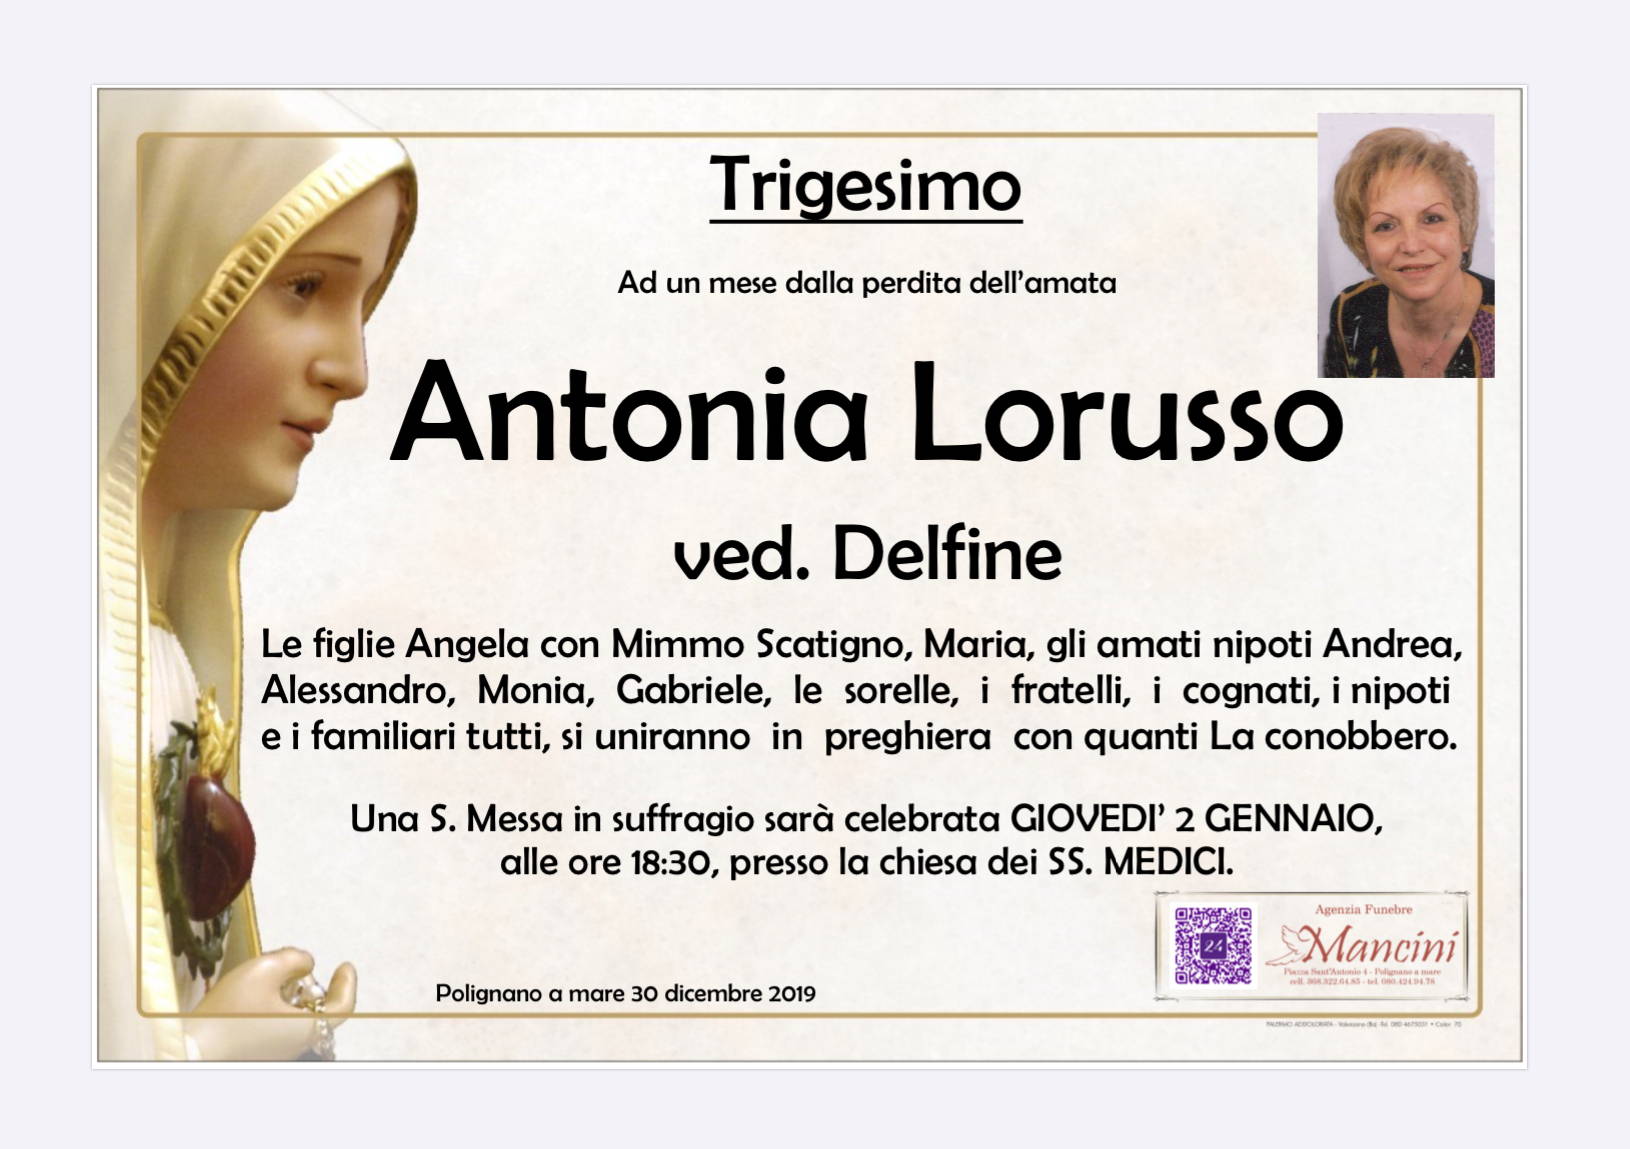 Antonia Lorusso